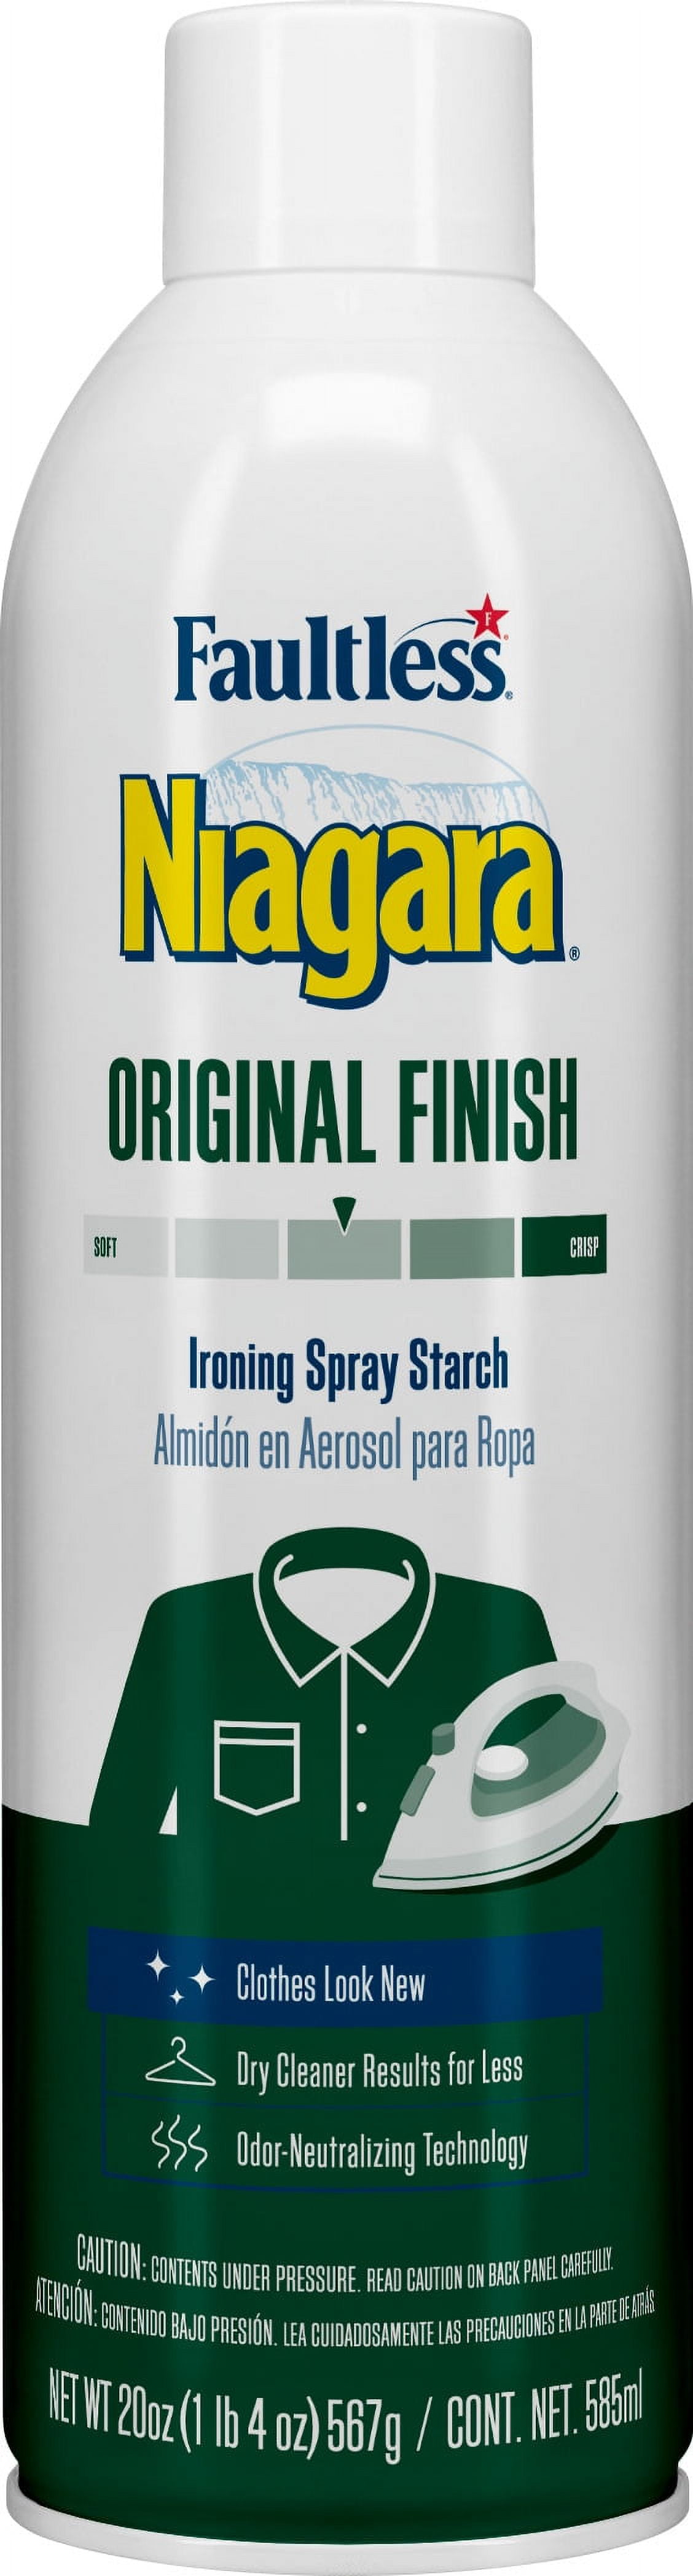 Faultless Niagara Original Finish Ironing Spray Starch, 20 oz 